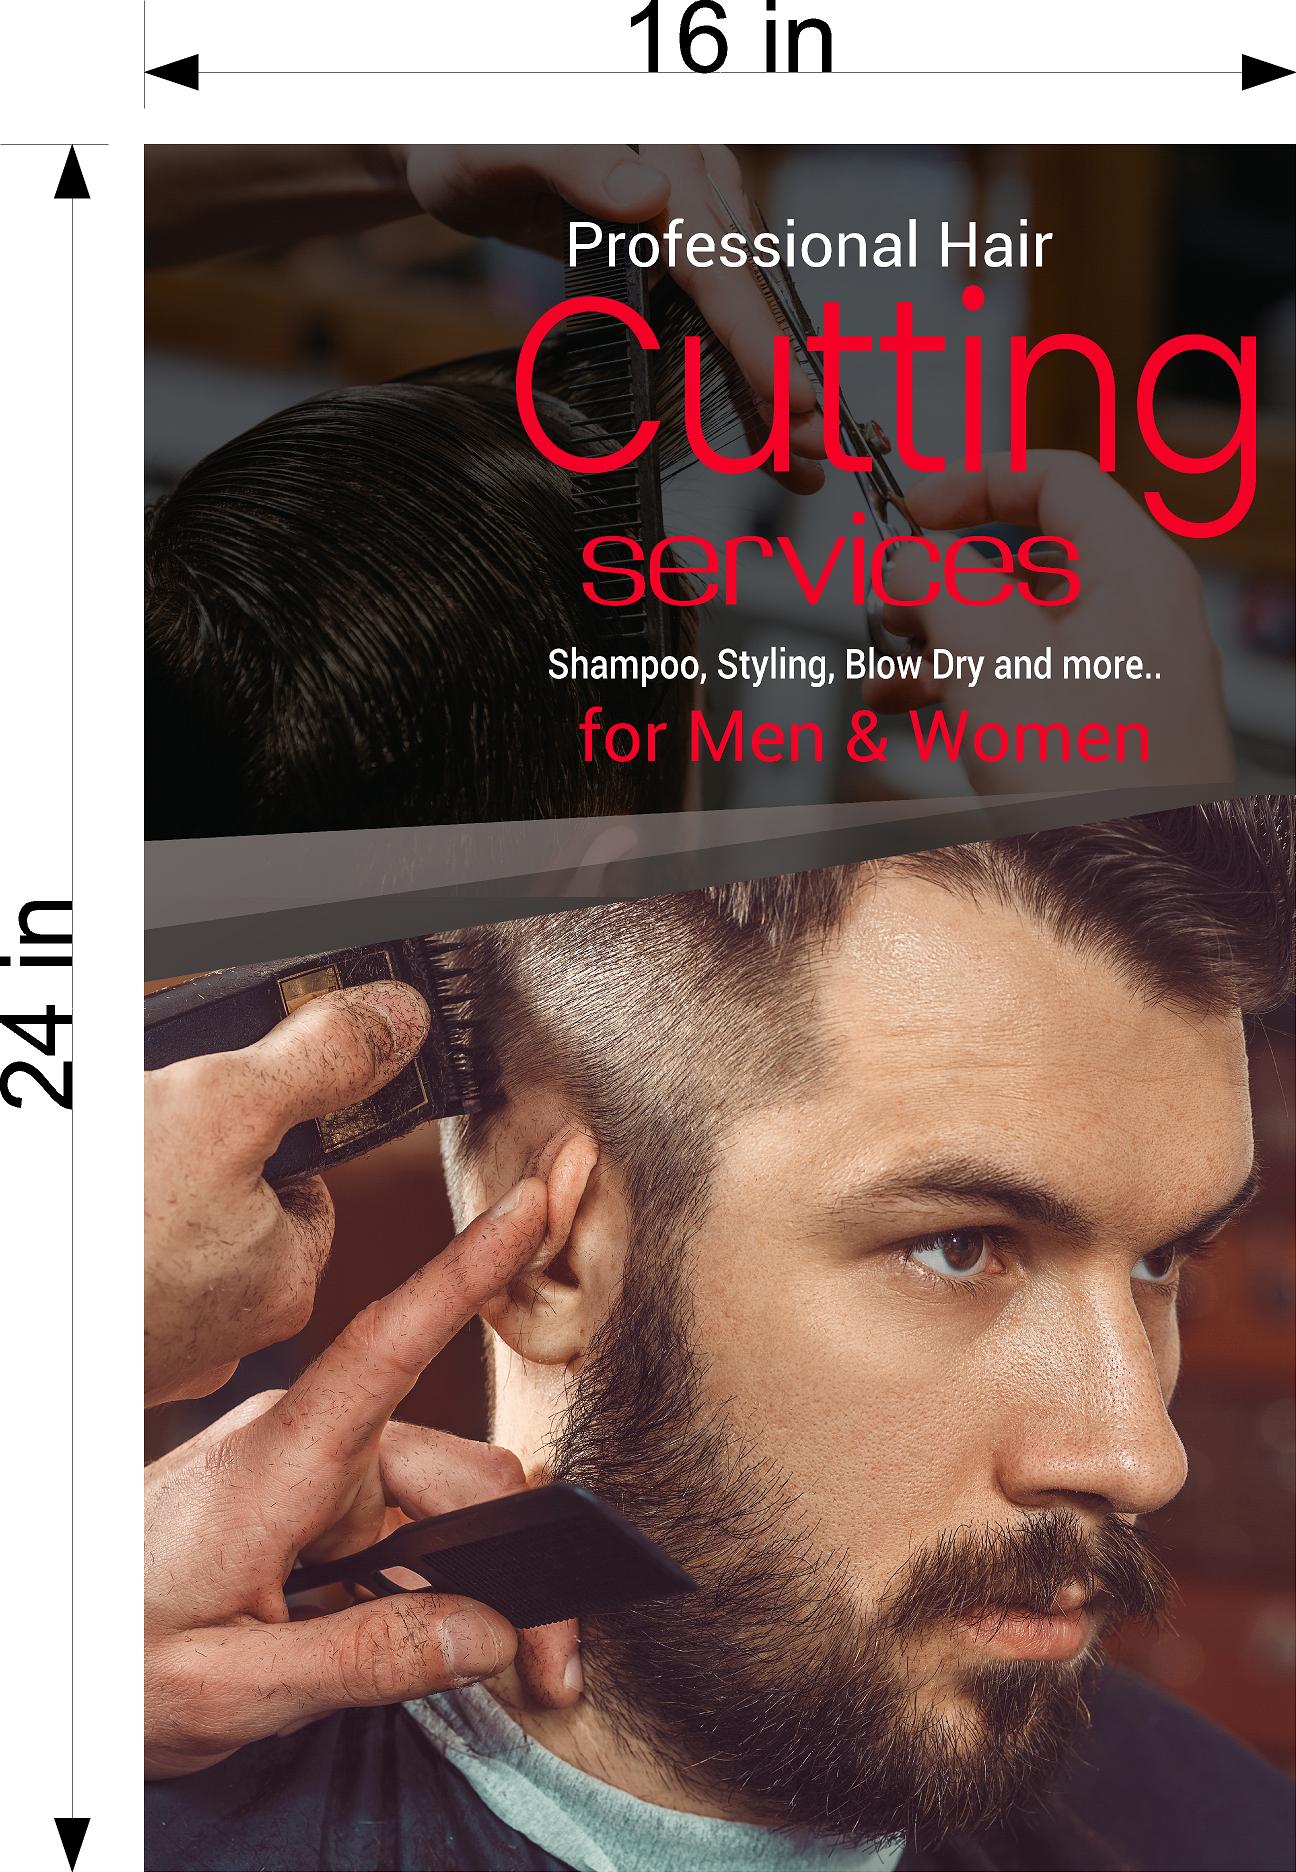 Barber 06 Photo-Realistic Paper Poster Premium Interior Sign Wall Window Non-Laminated Man Men Boy Beard Haircut Vertical